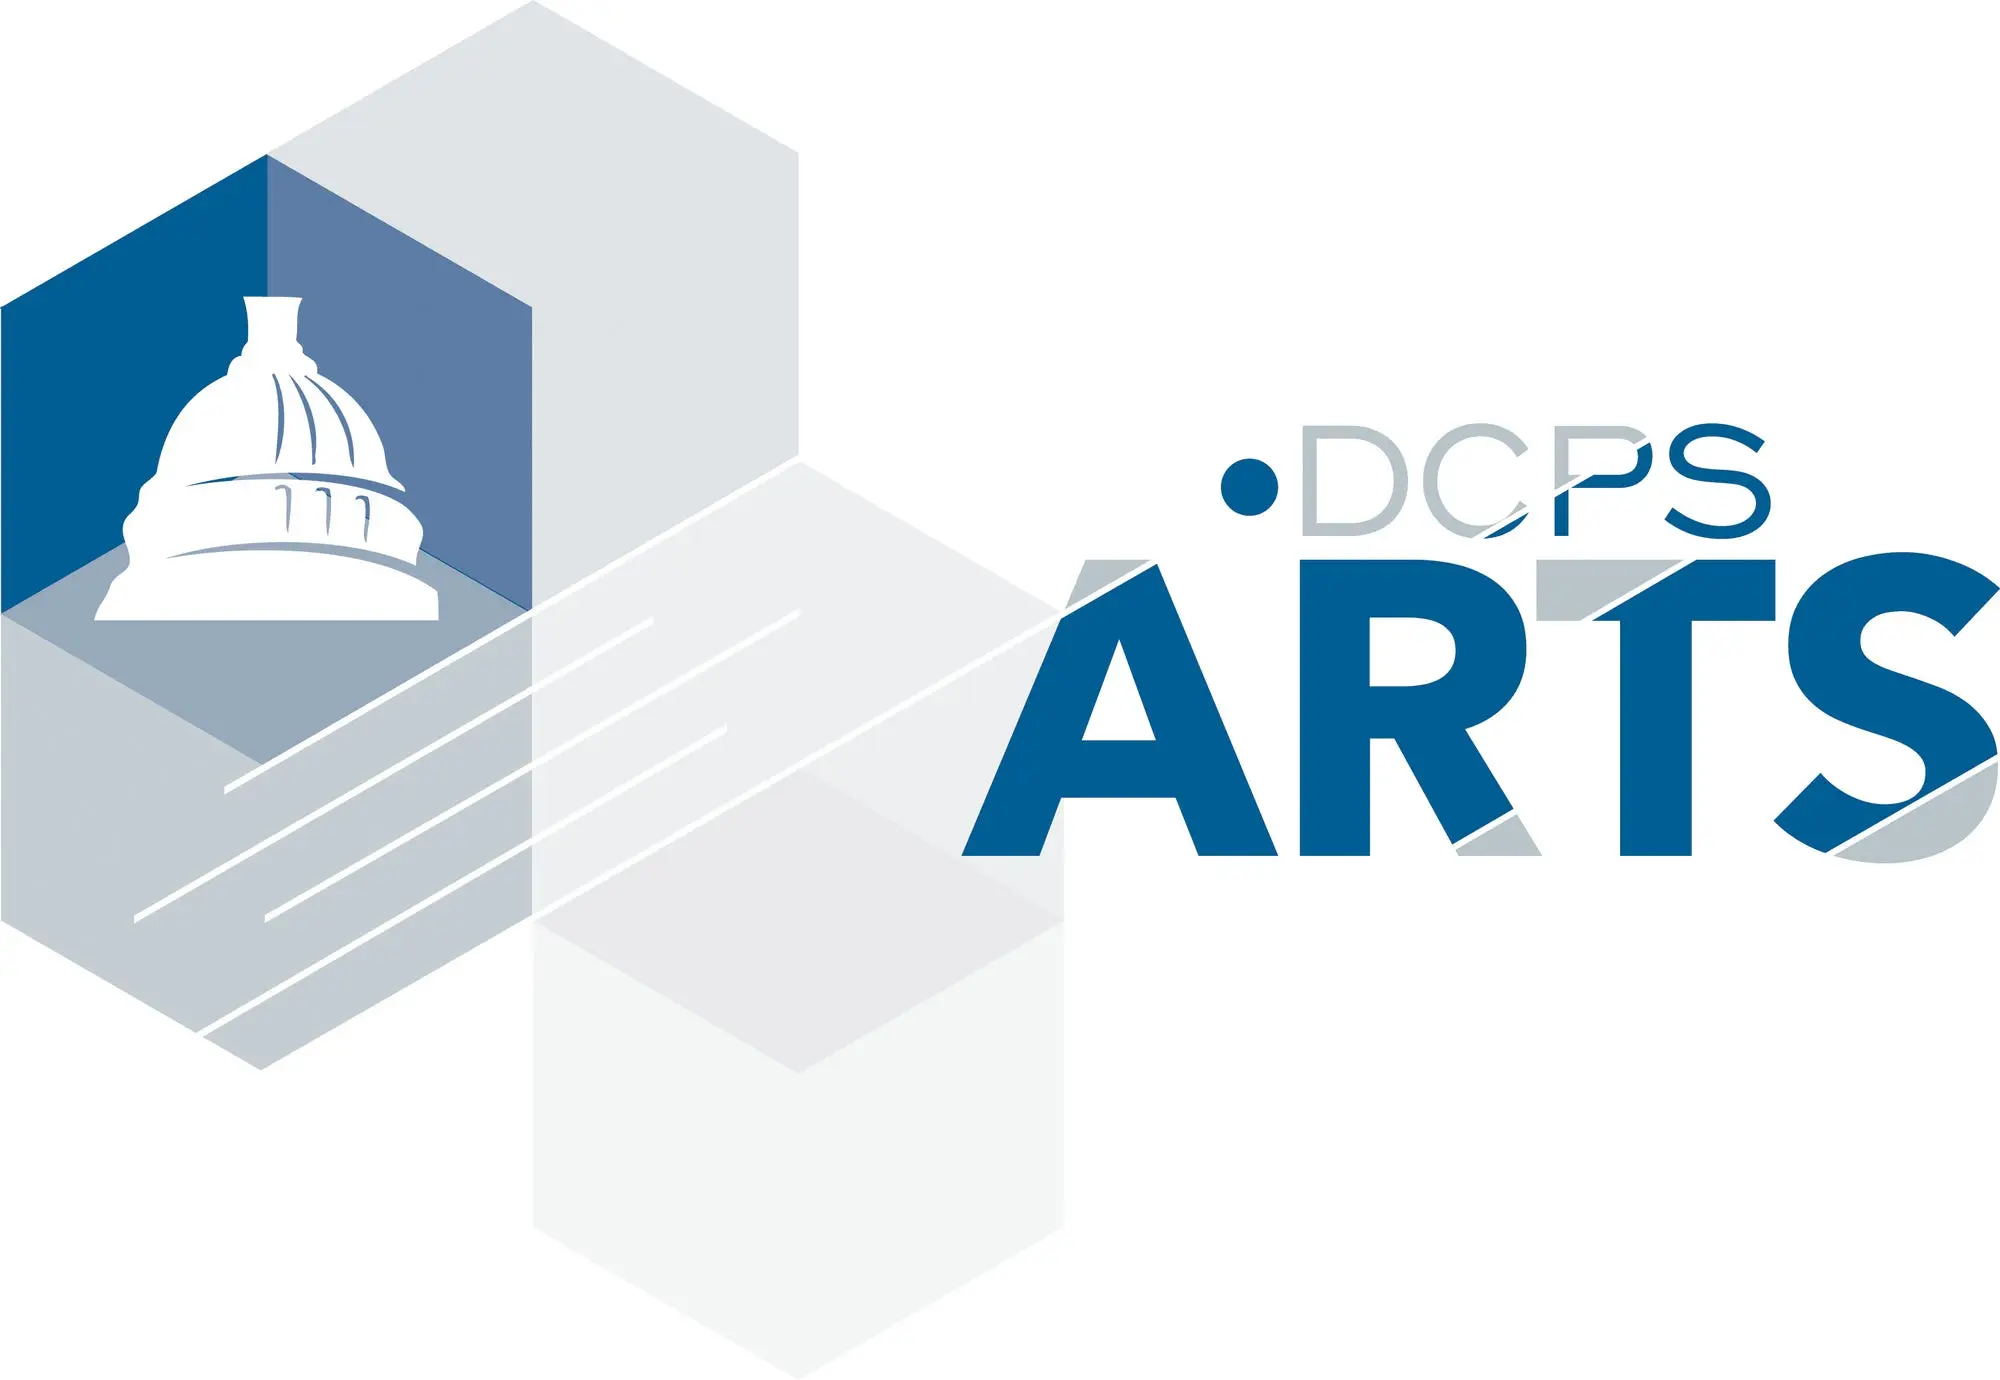 DCPS Arts logo. 